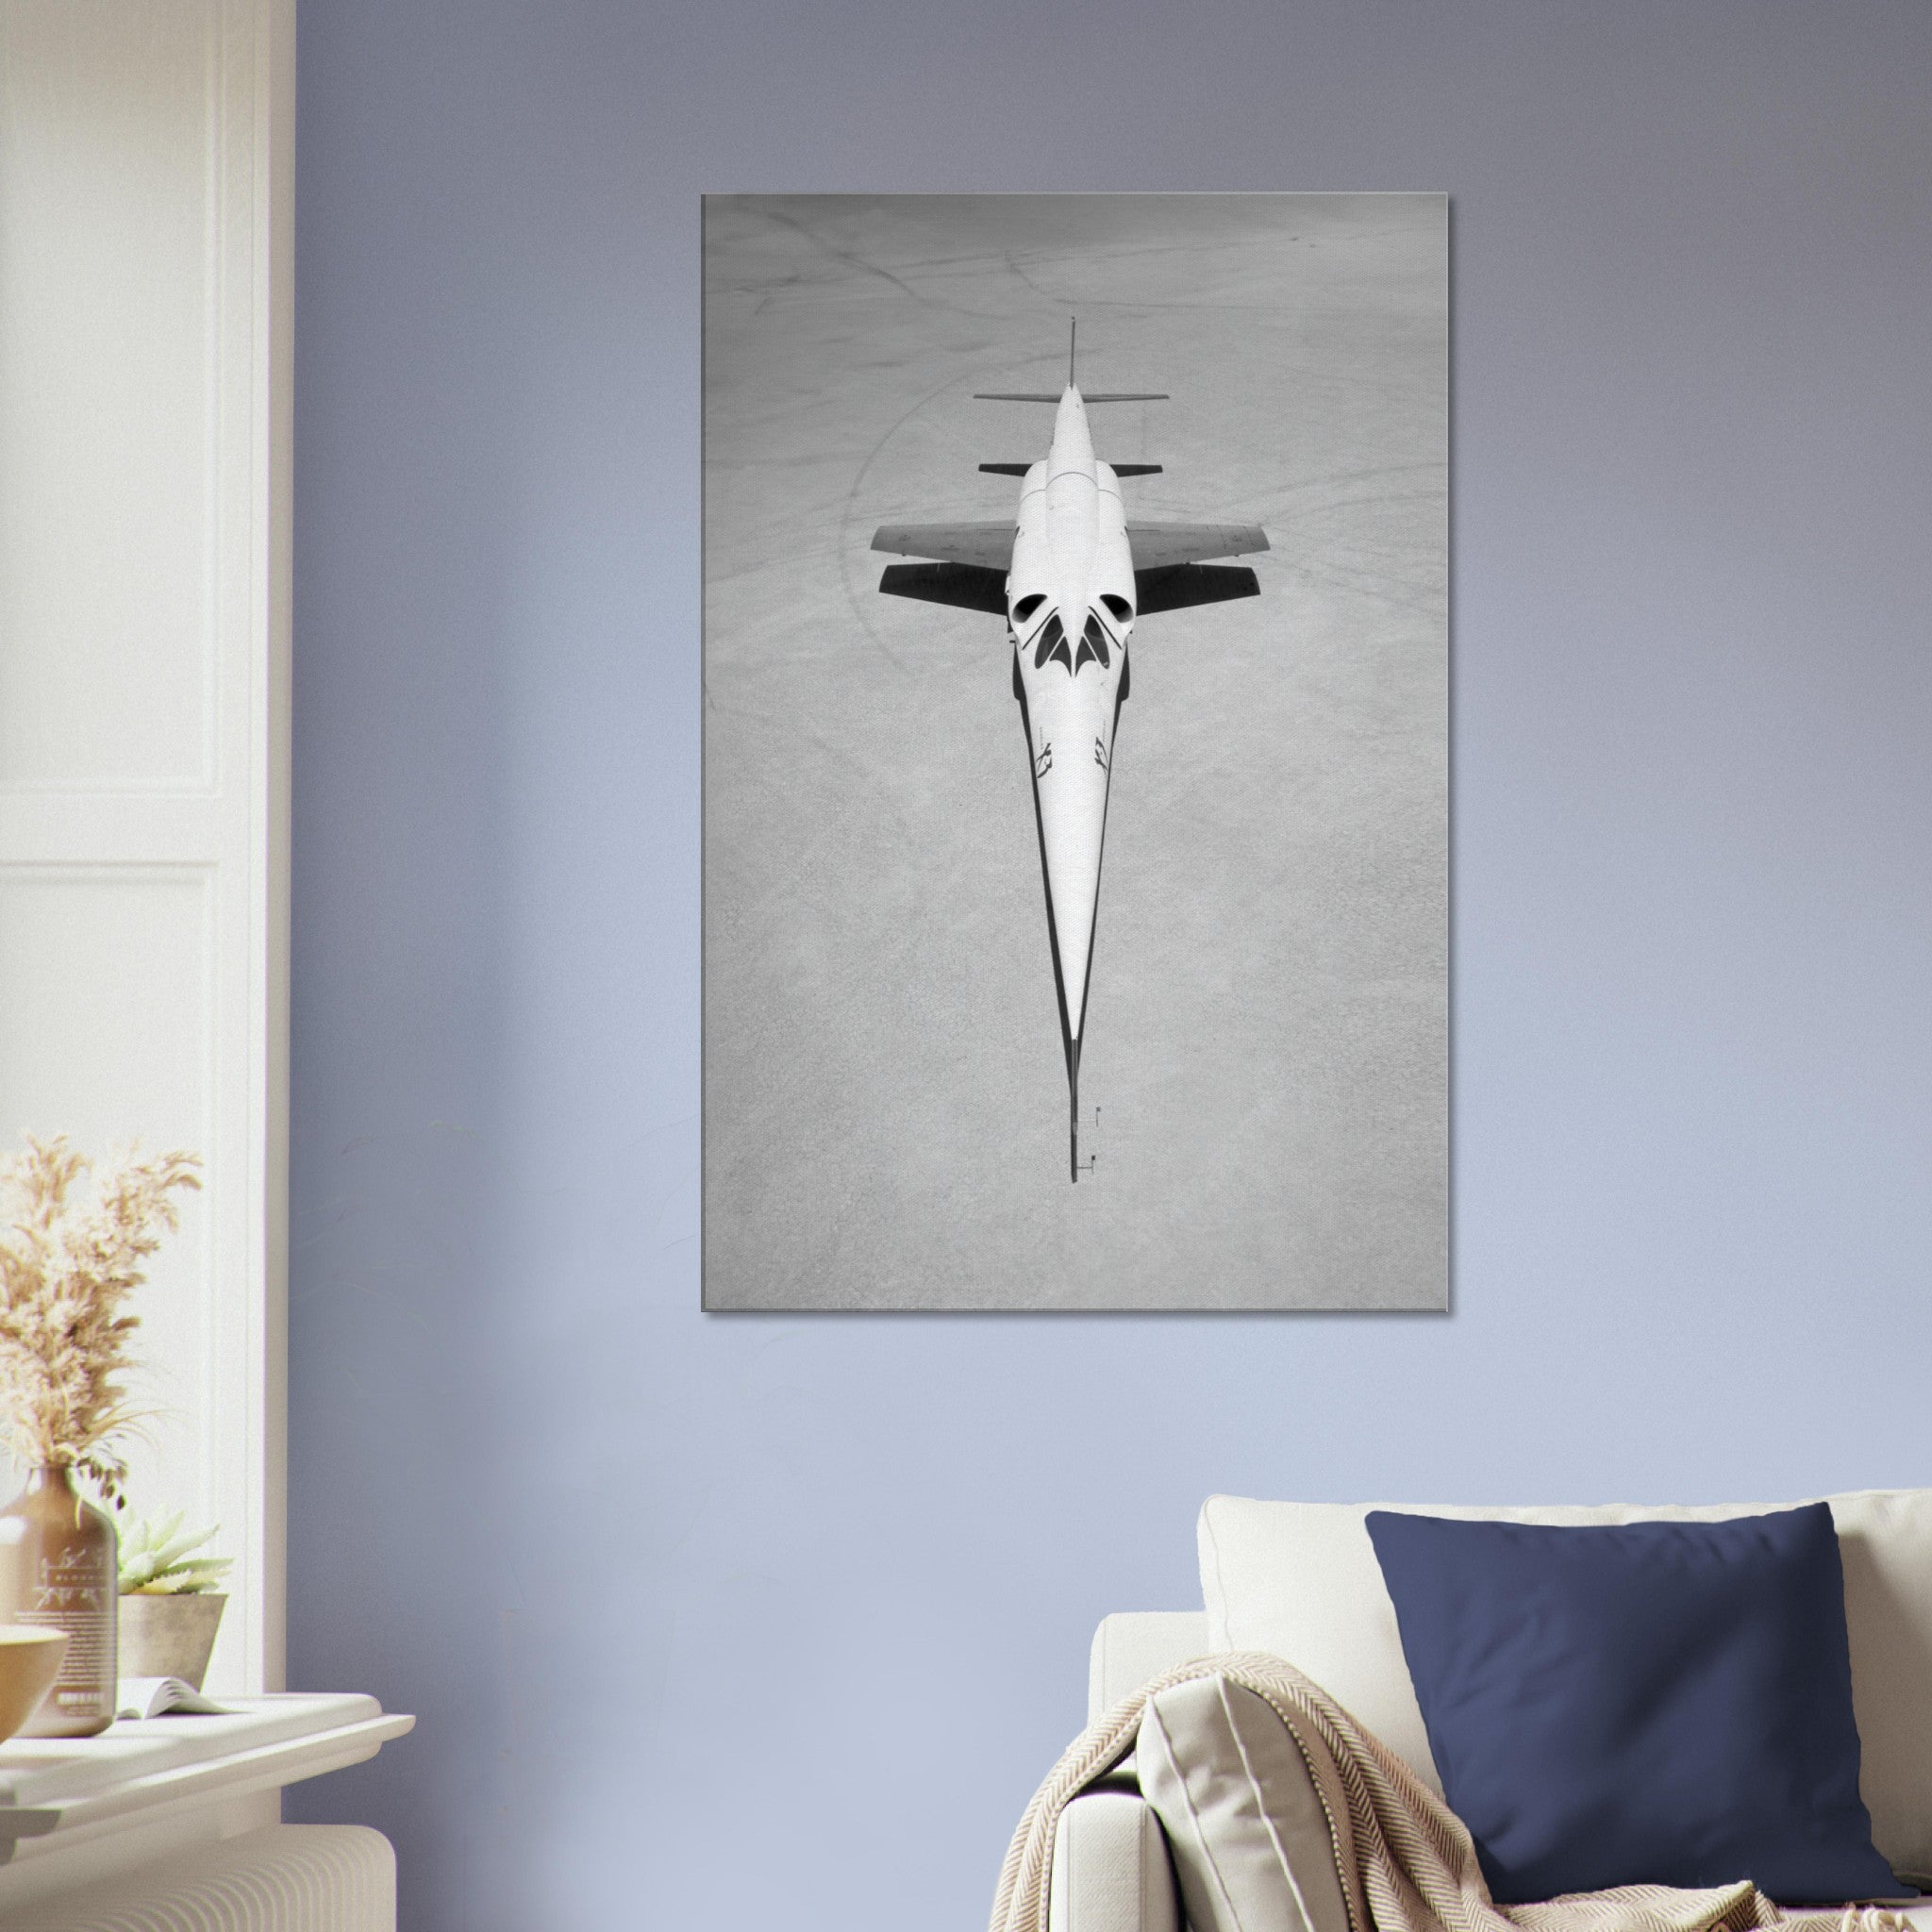 X-3 "Stiletto" on Canvas - I Love a Hangar